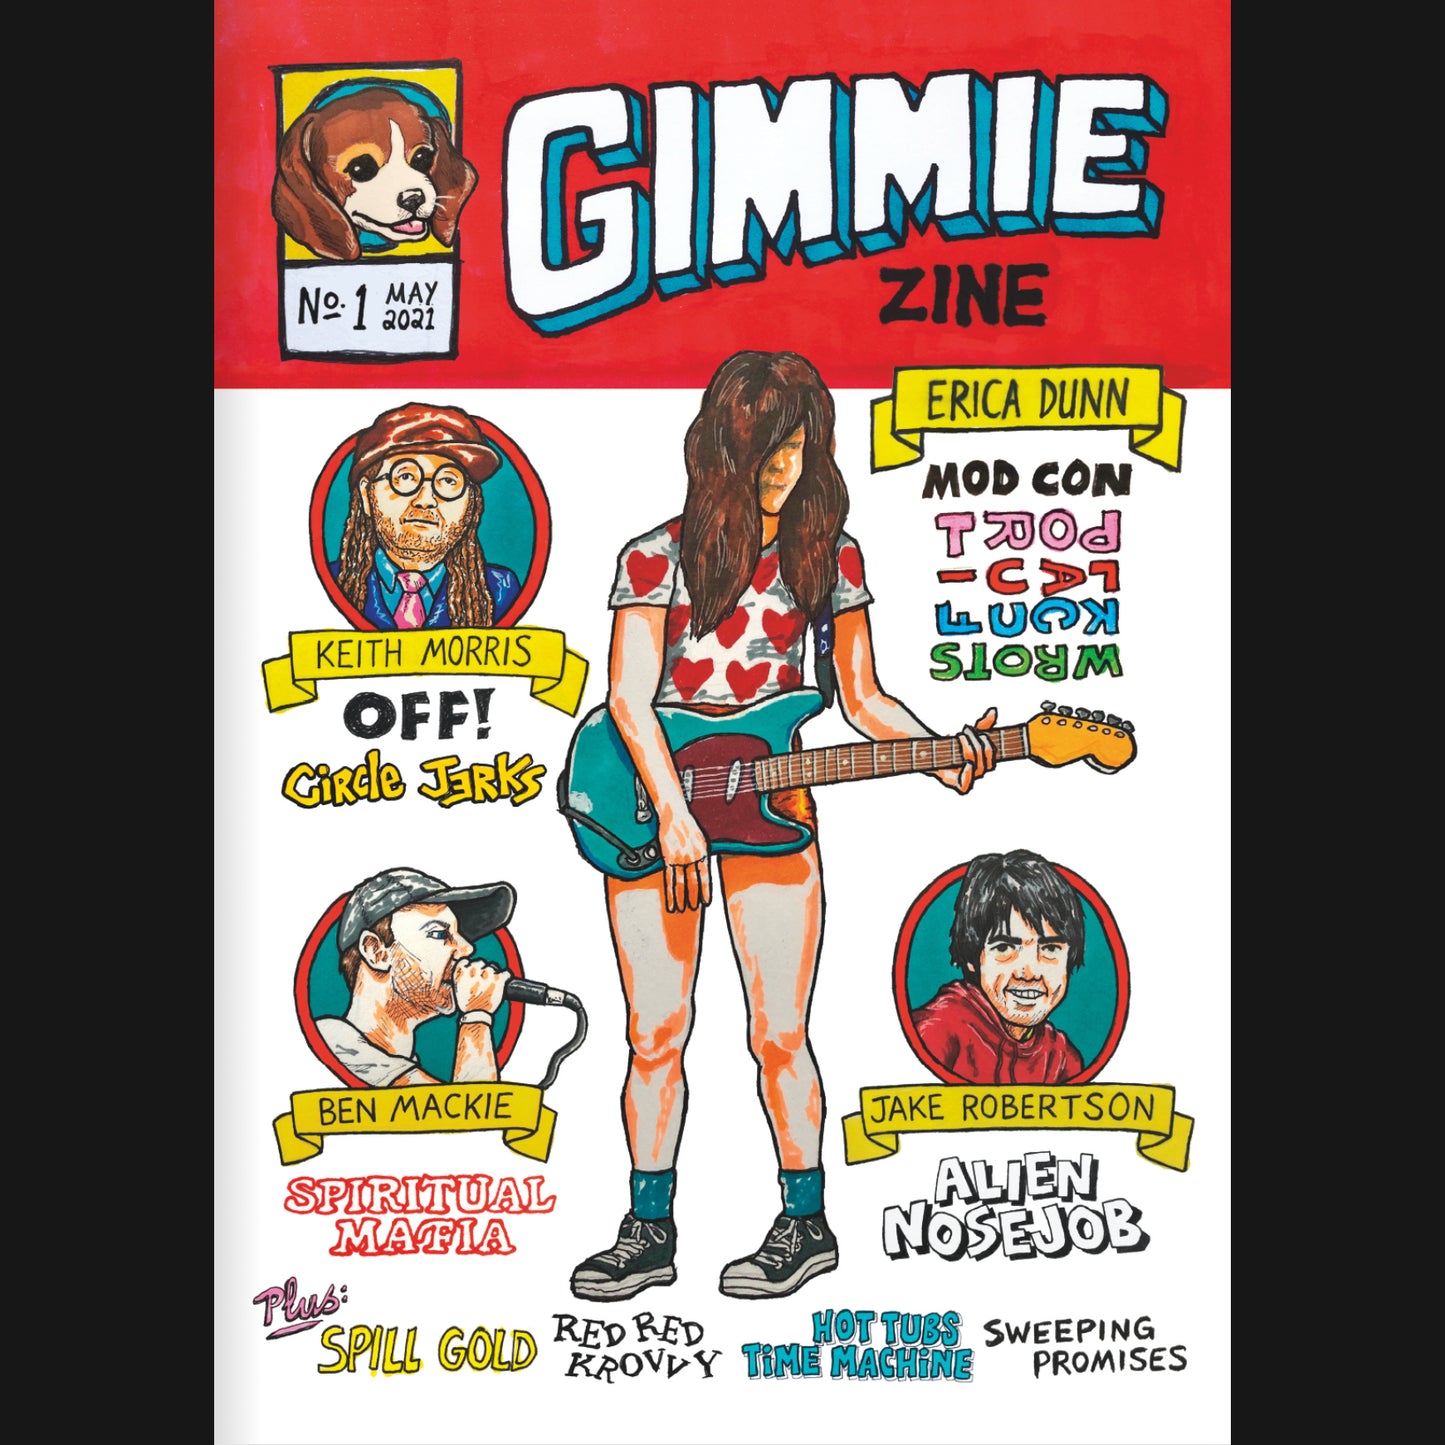 GIMMIE ZINE - "NO. 1" ZINE